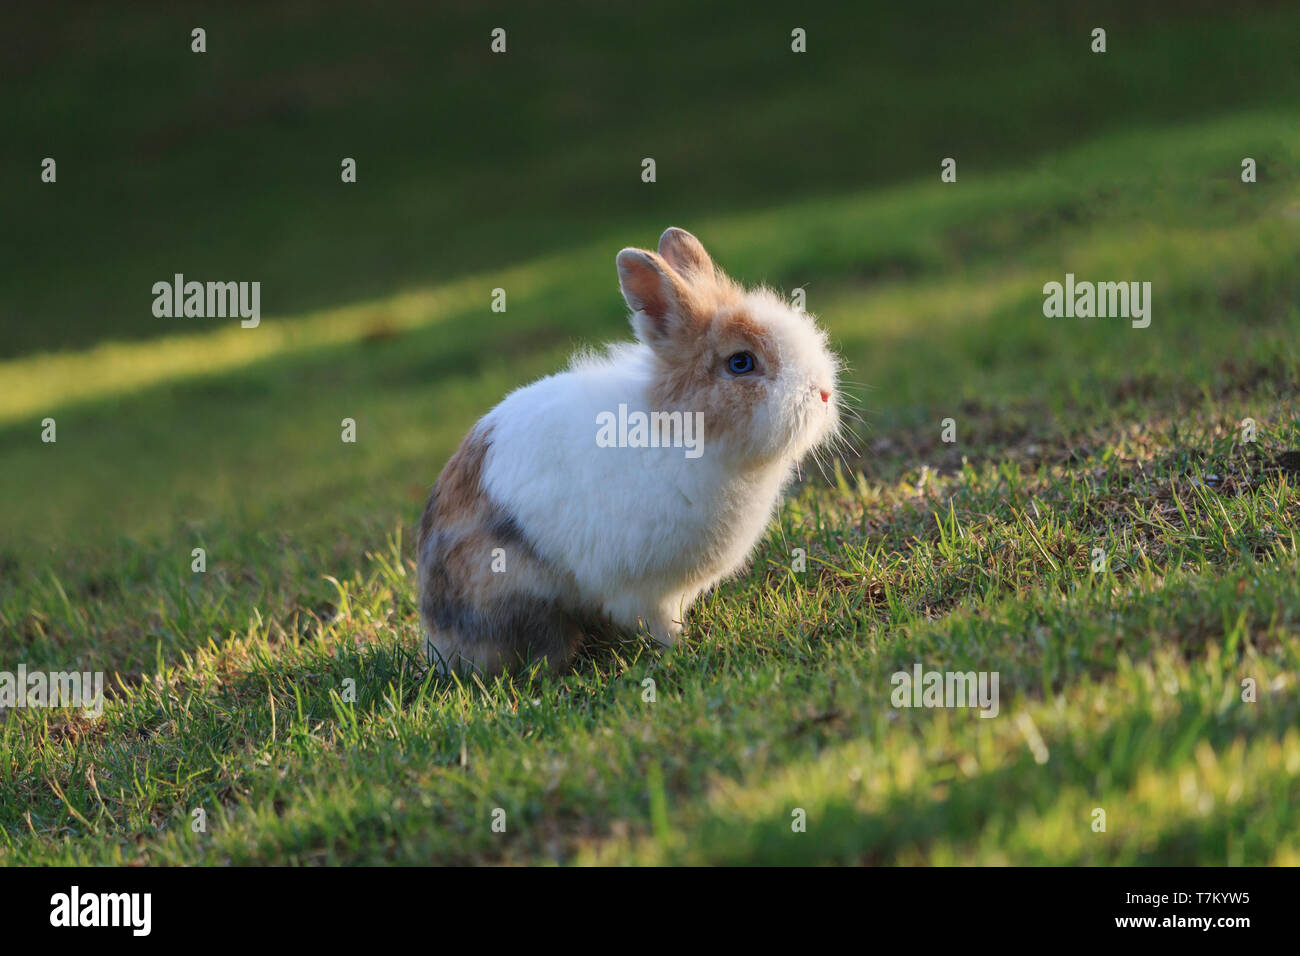 Netherland Dwarf rabbit sitting on grass during a sunset Stock Photo